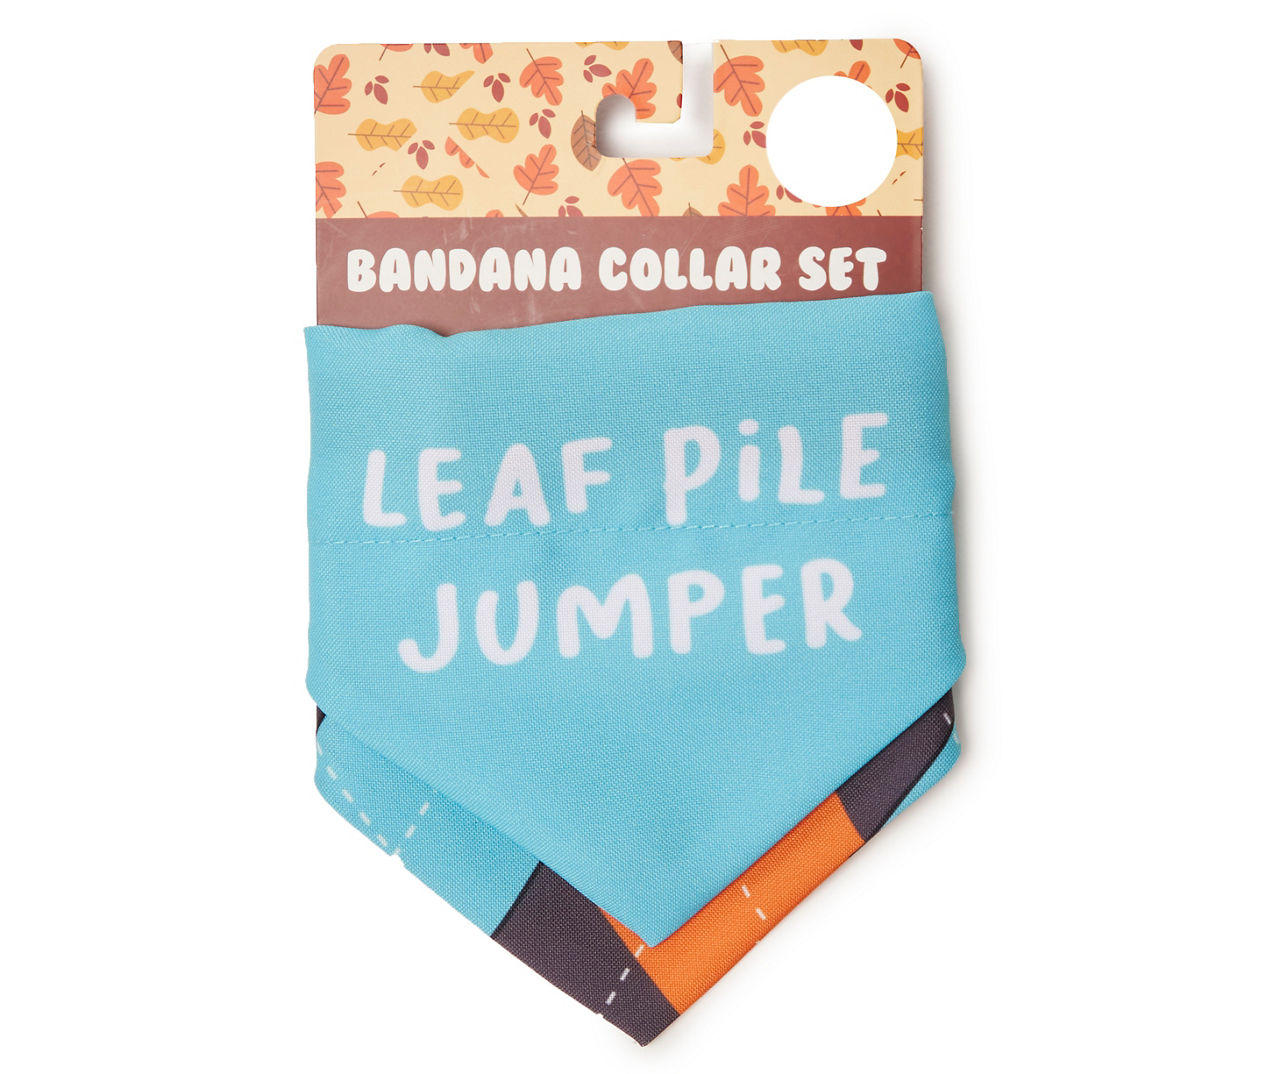 Pet Small/Medium "Leaf Pile Jumper" Teal & Orange 2-Piece Bandana Collar Set